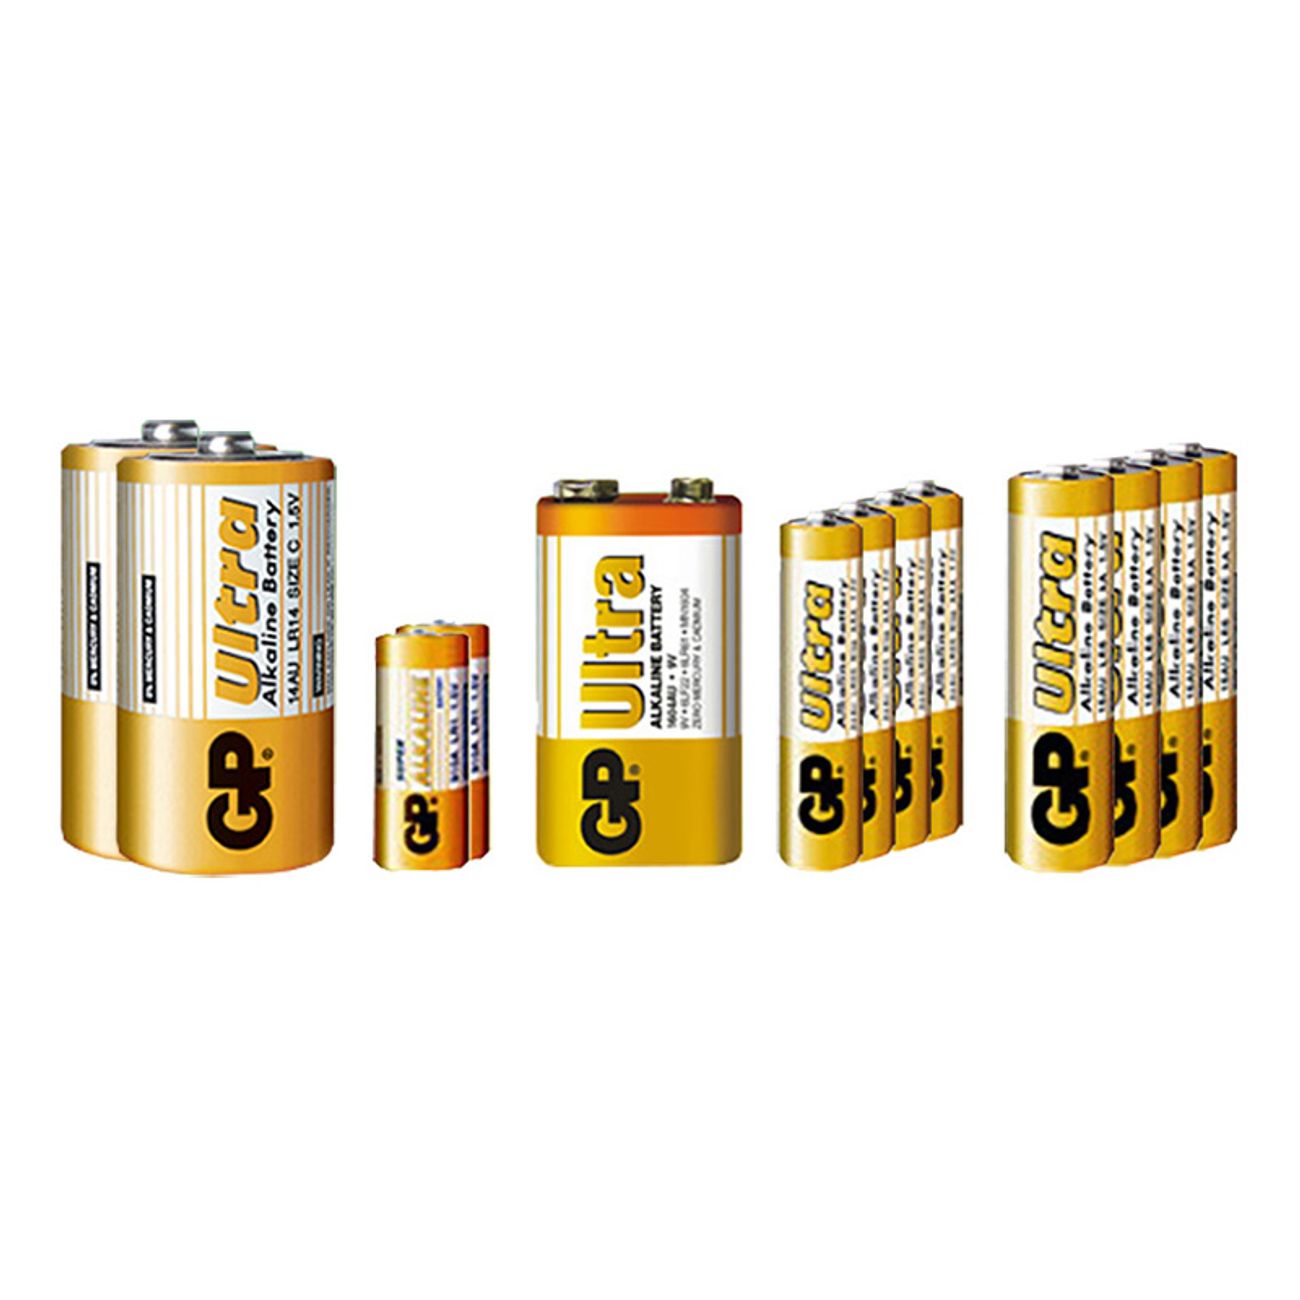 gp-ultra-batterier-5